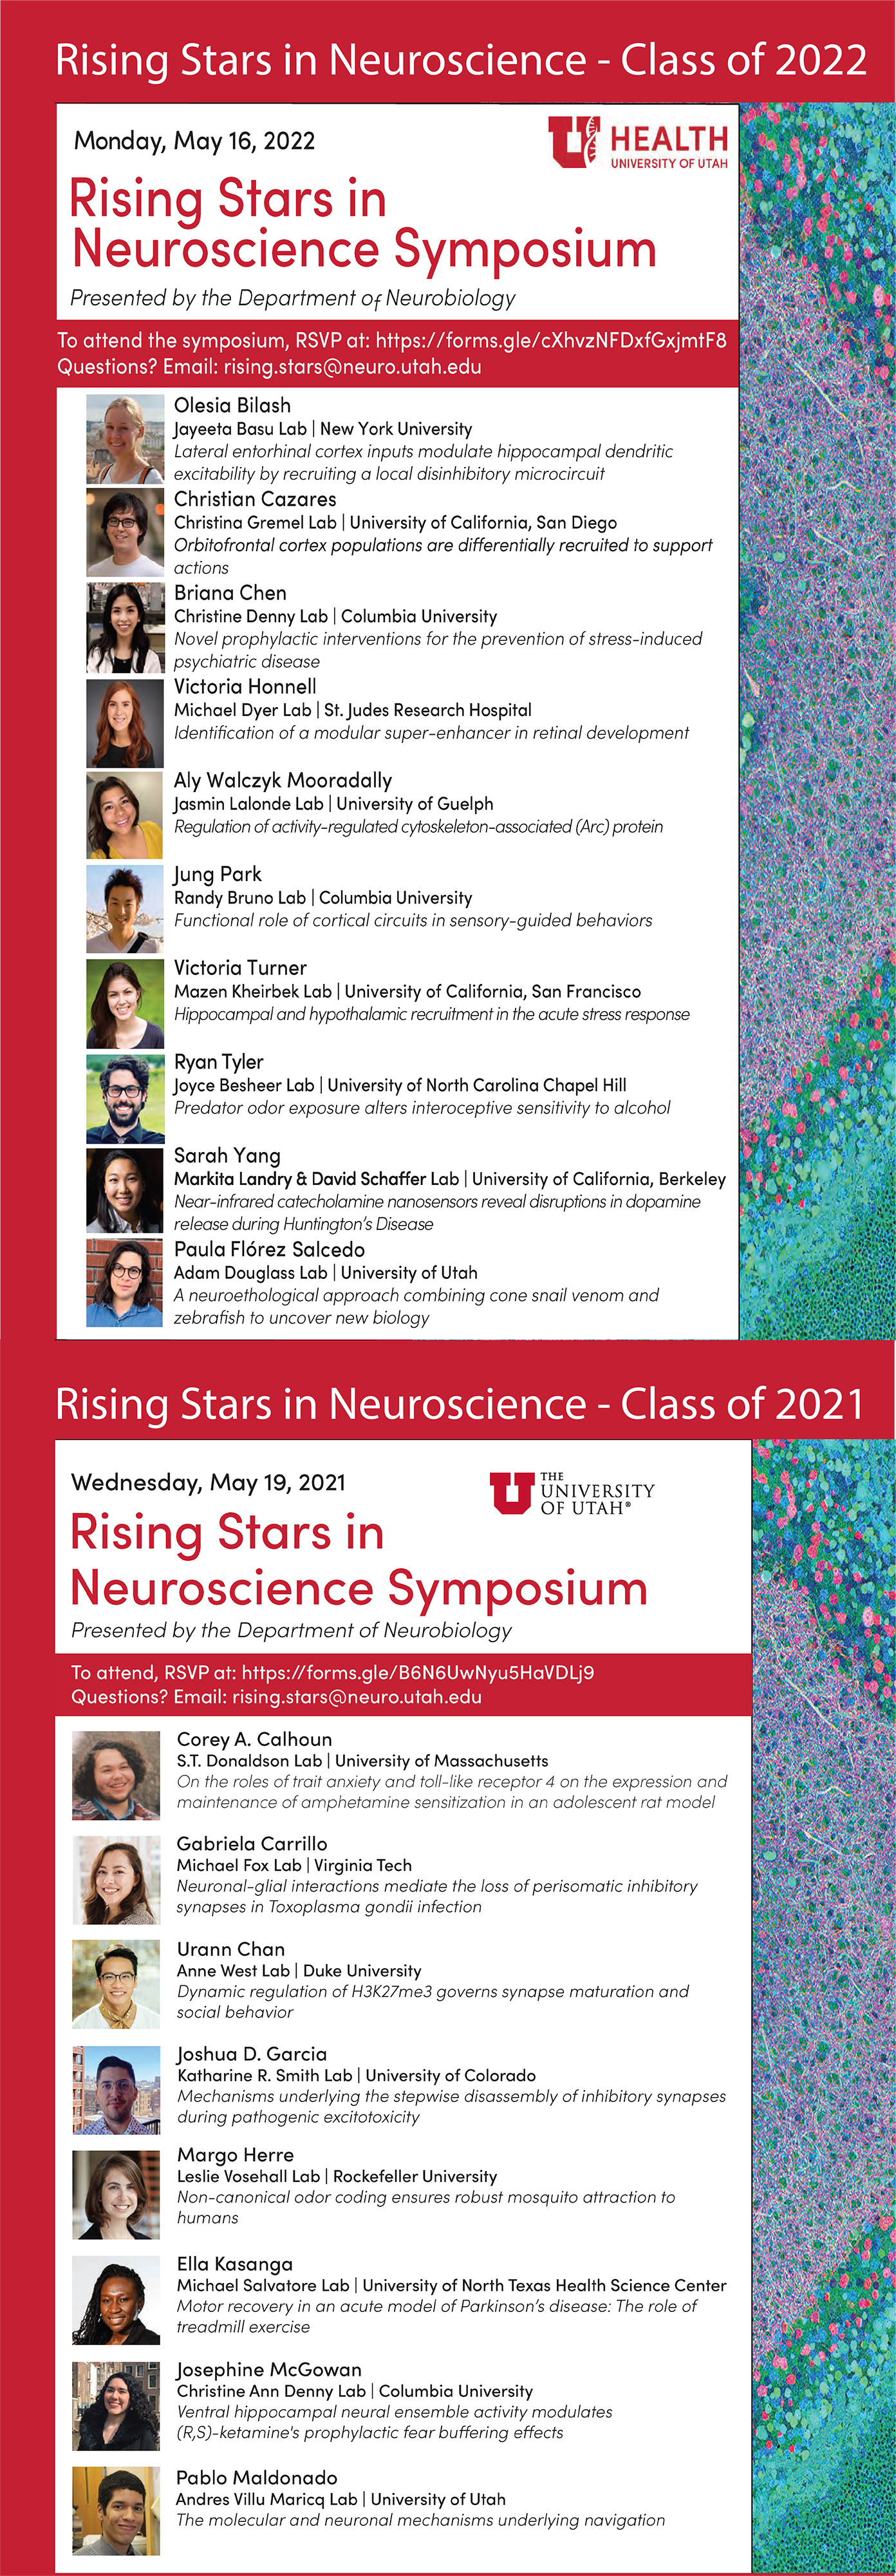 Rising Stars in Neuroscience Previous Classes